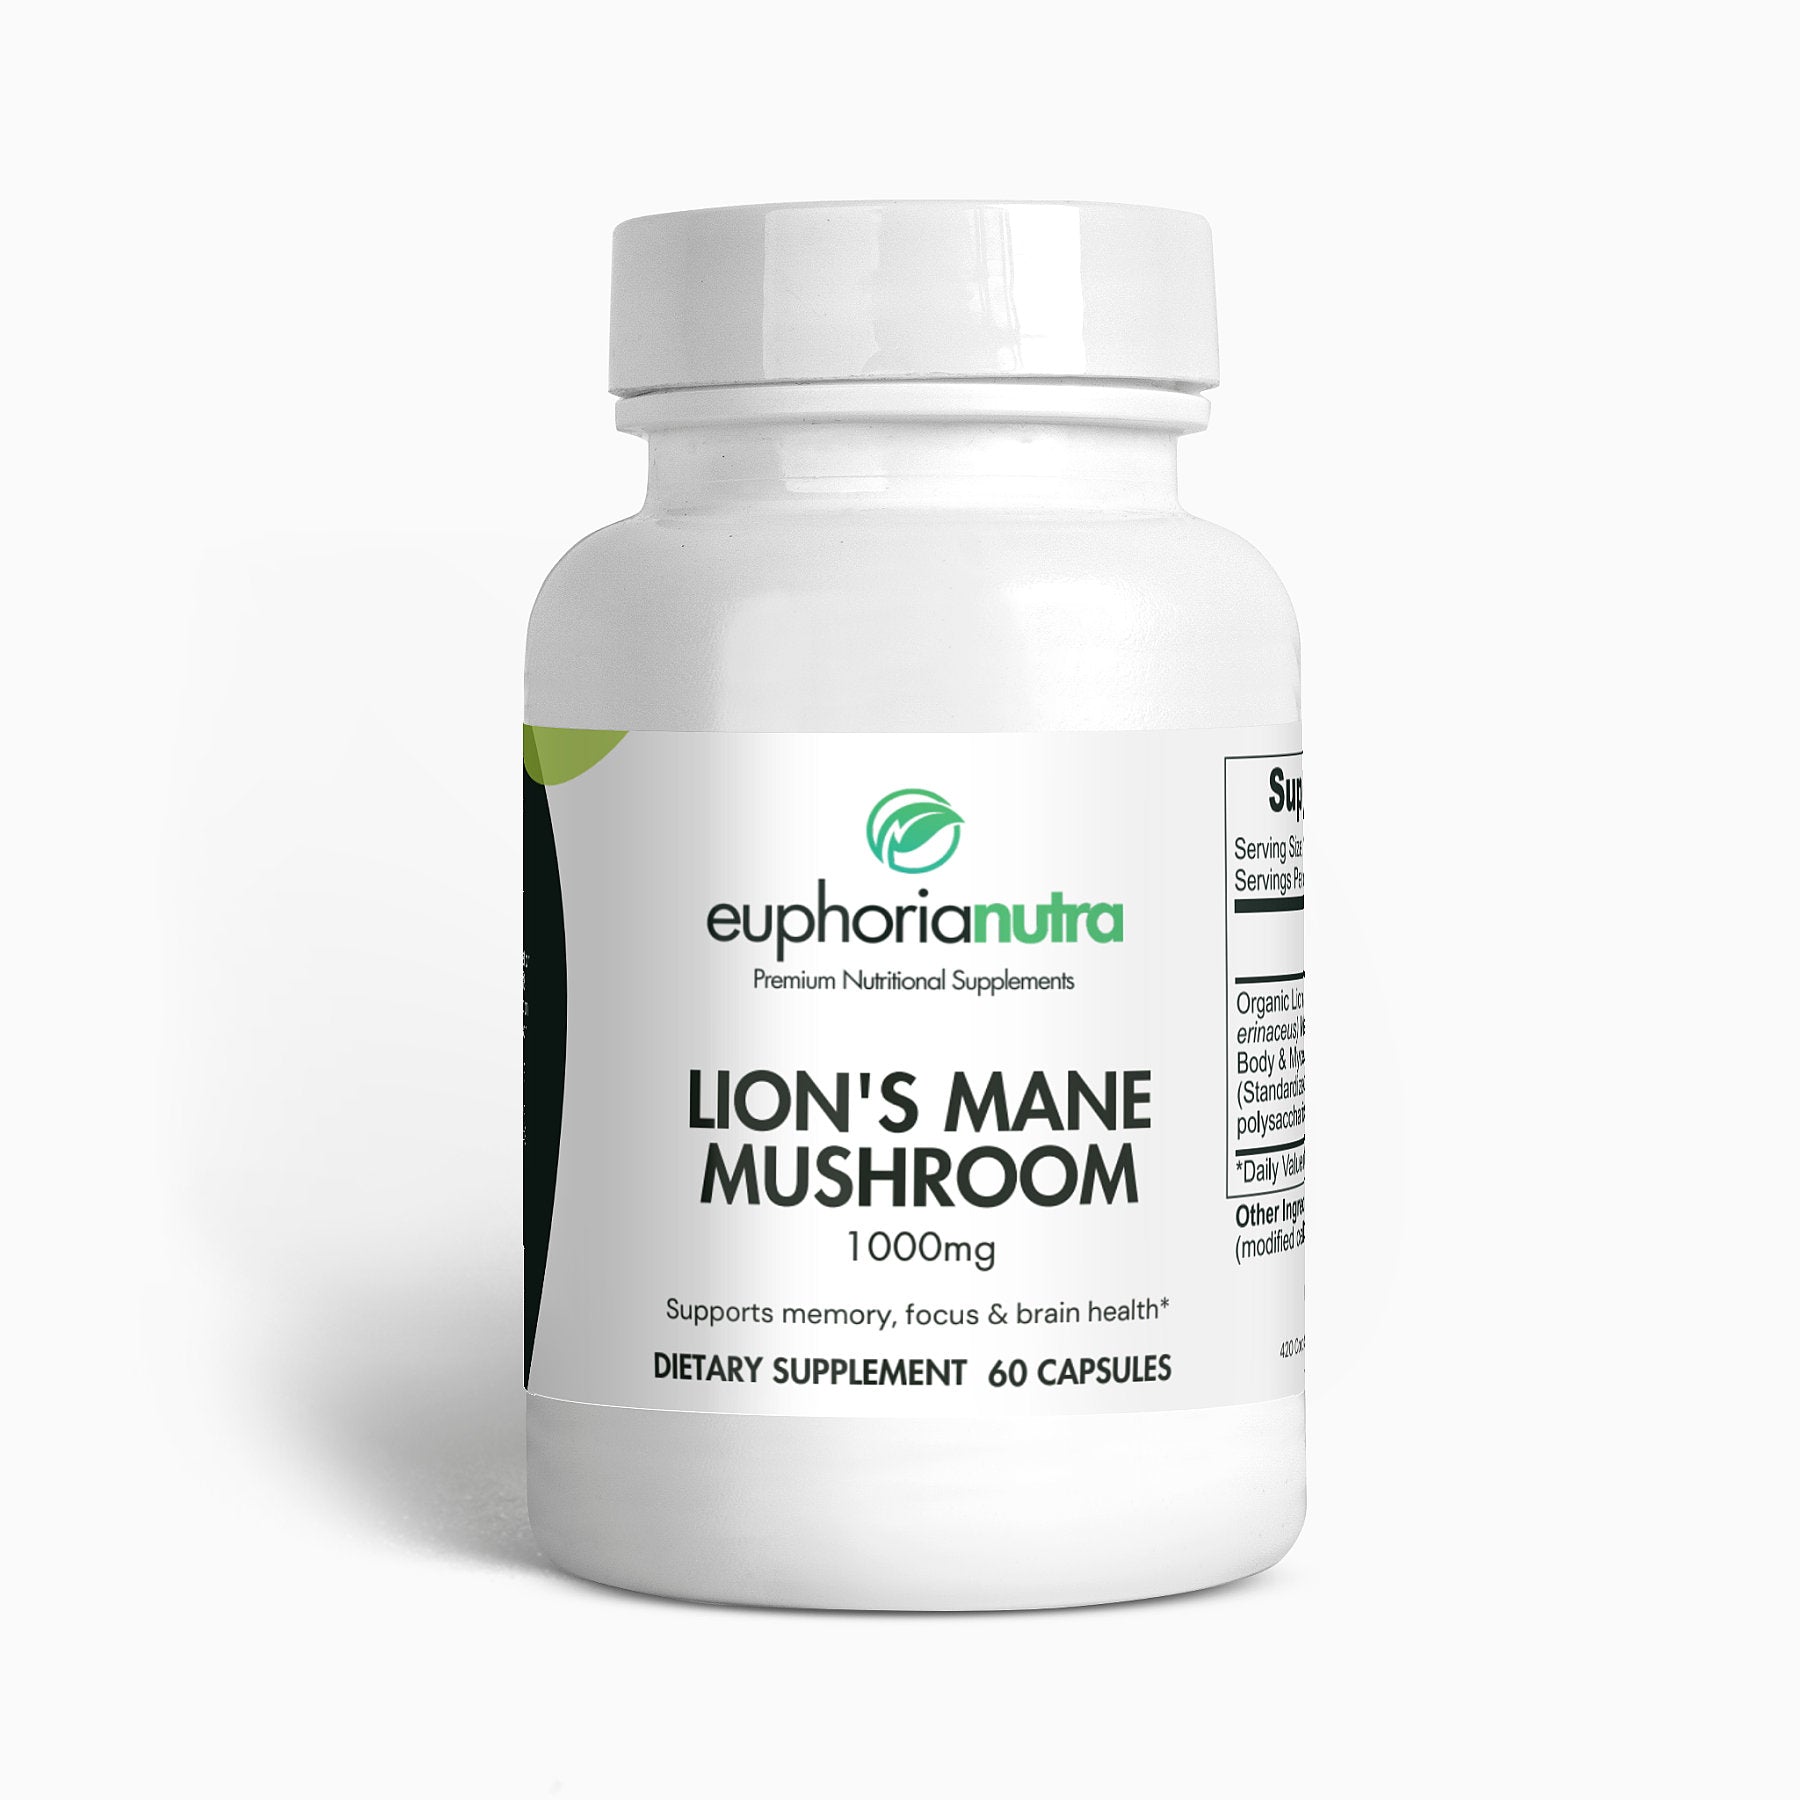 Lions-Mane-Mushroom-euphorianutra-supplements